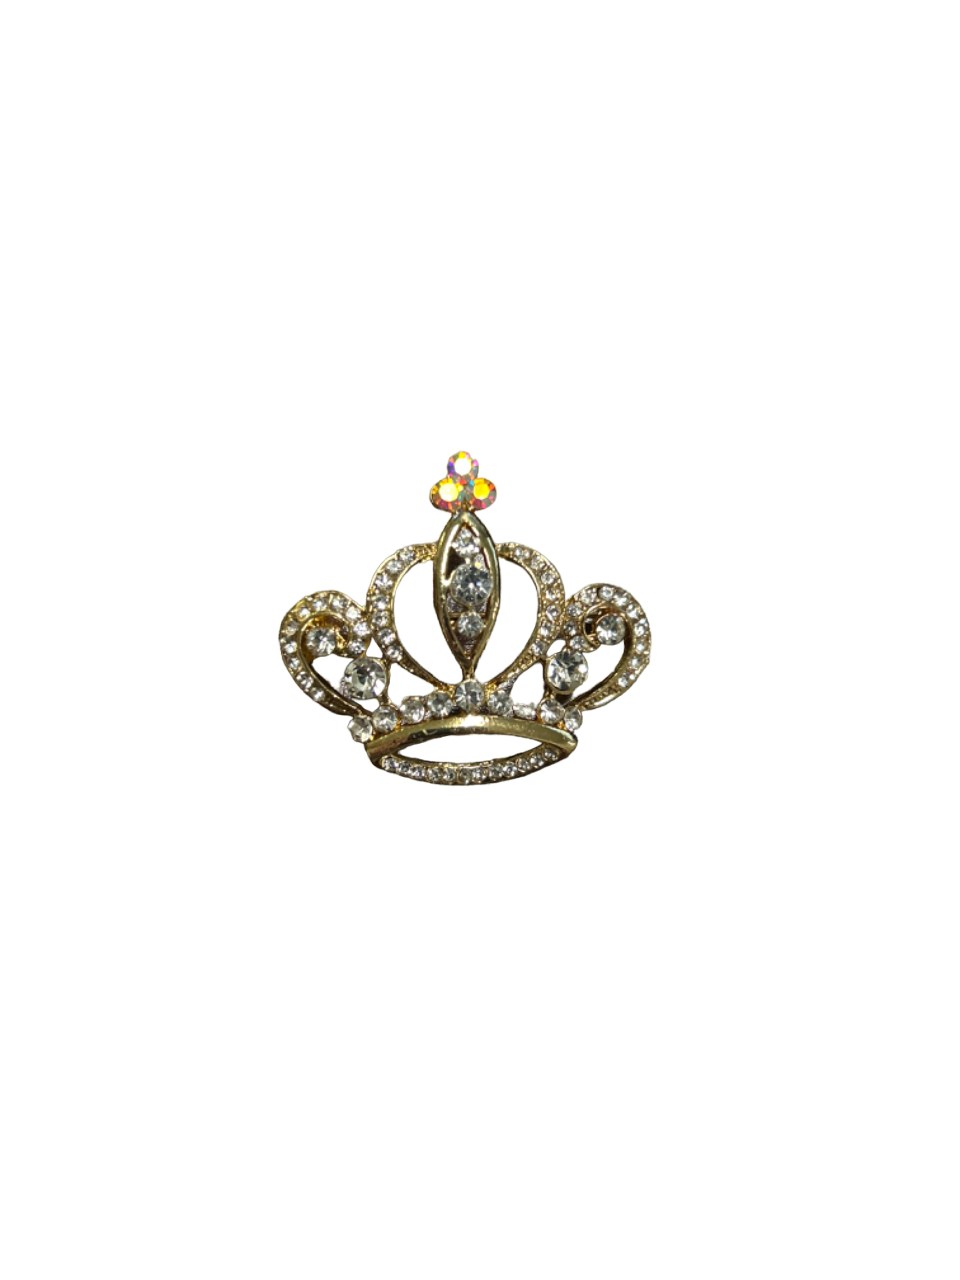 Gold W/ Rhinestones Crown PIn